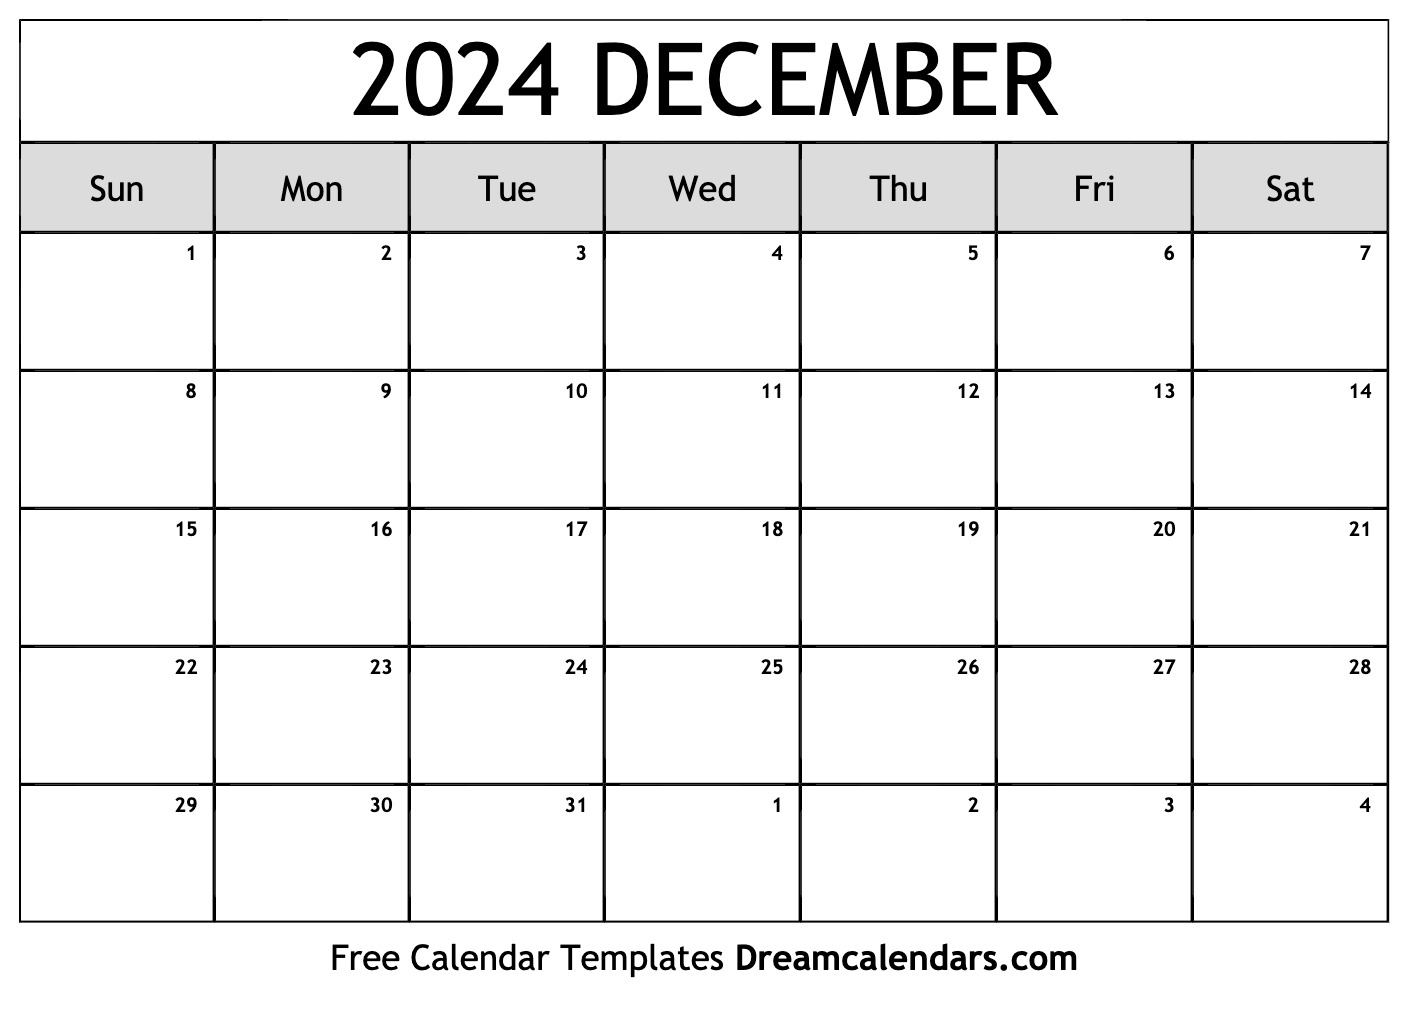 December 2024 Free Printable